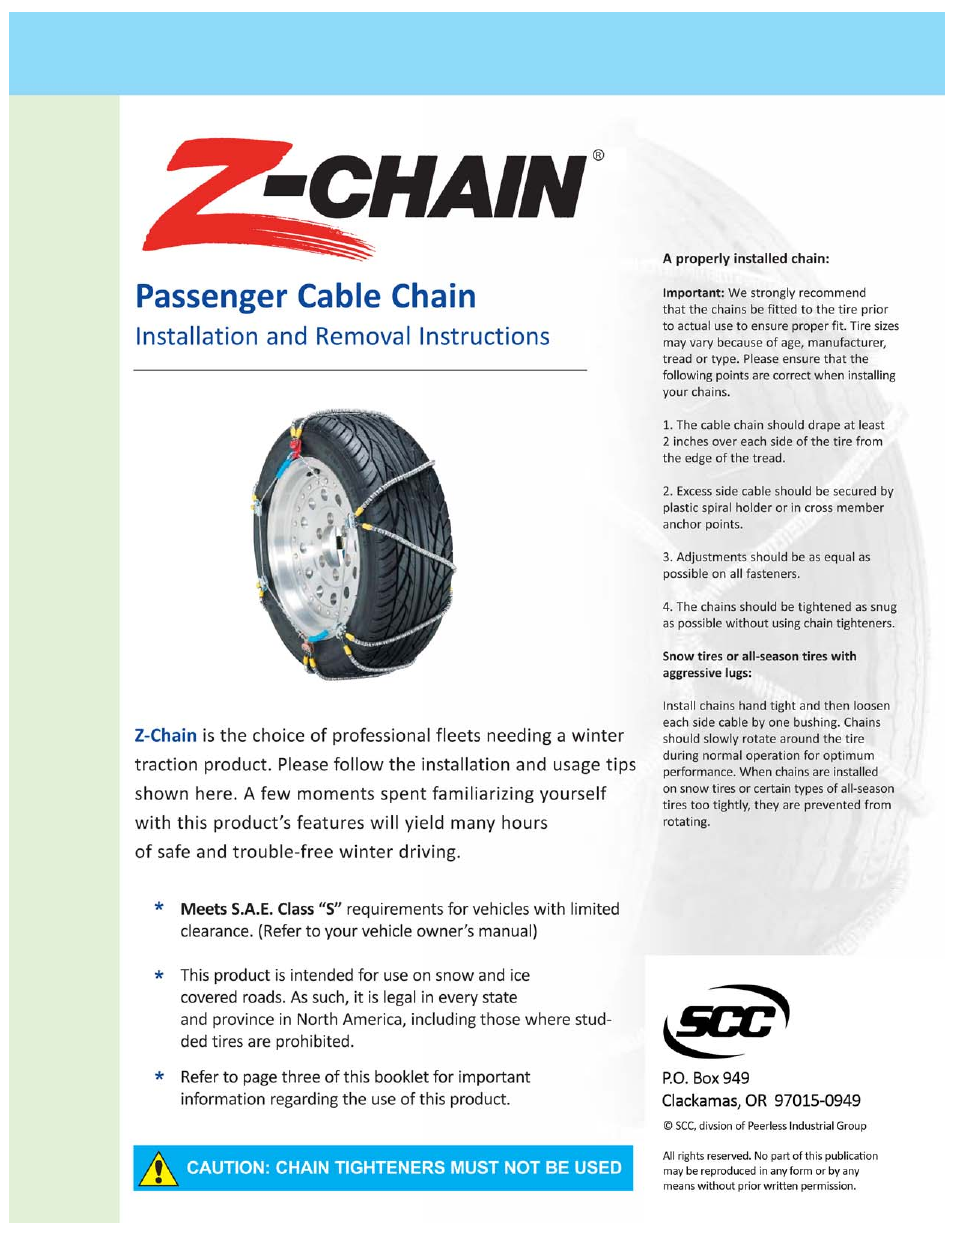 Z-Chain